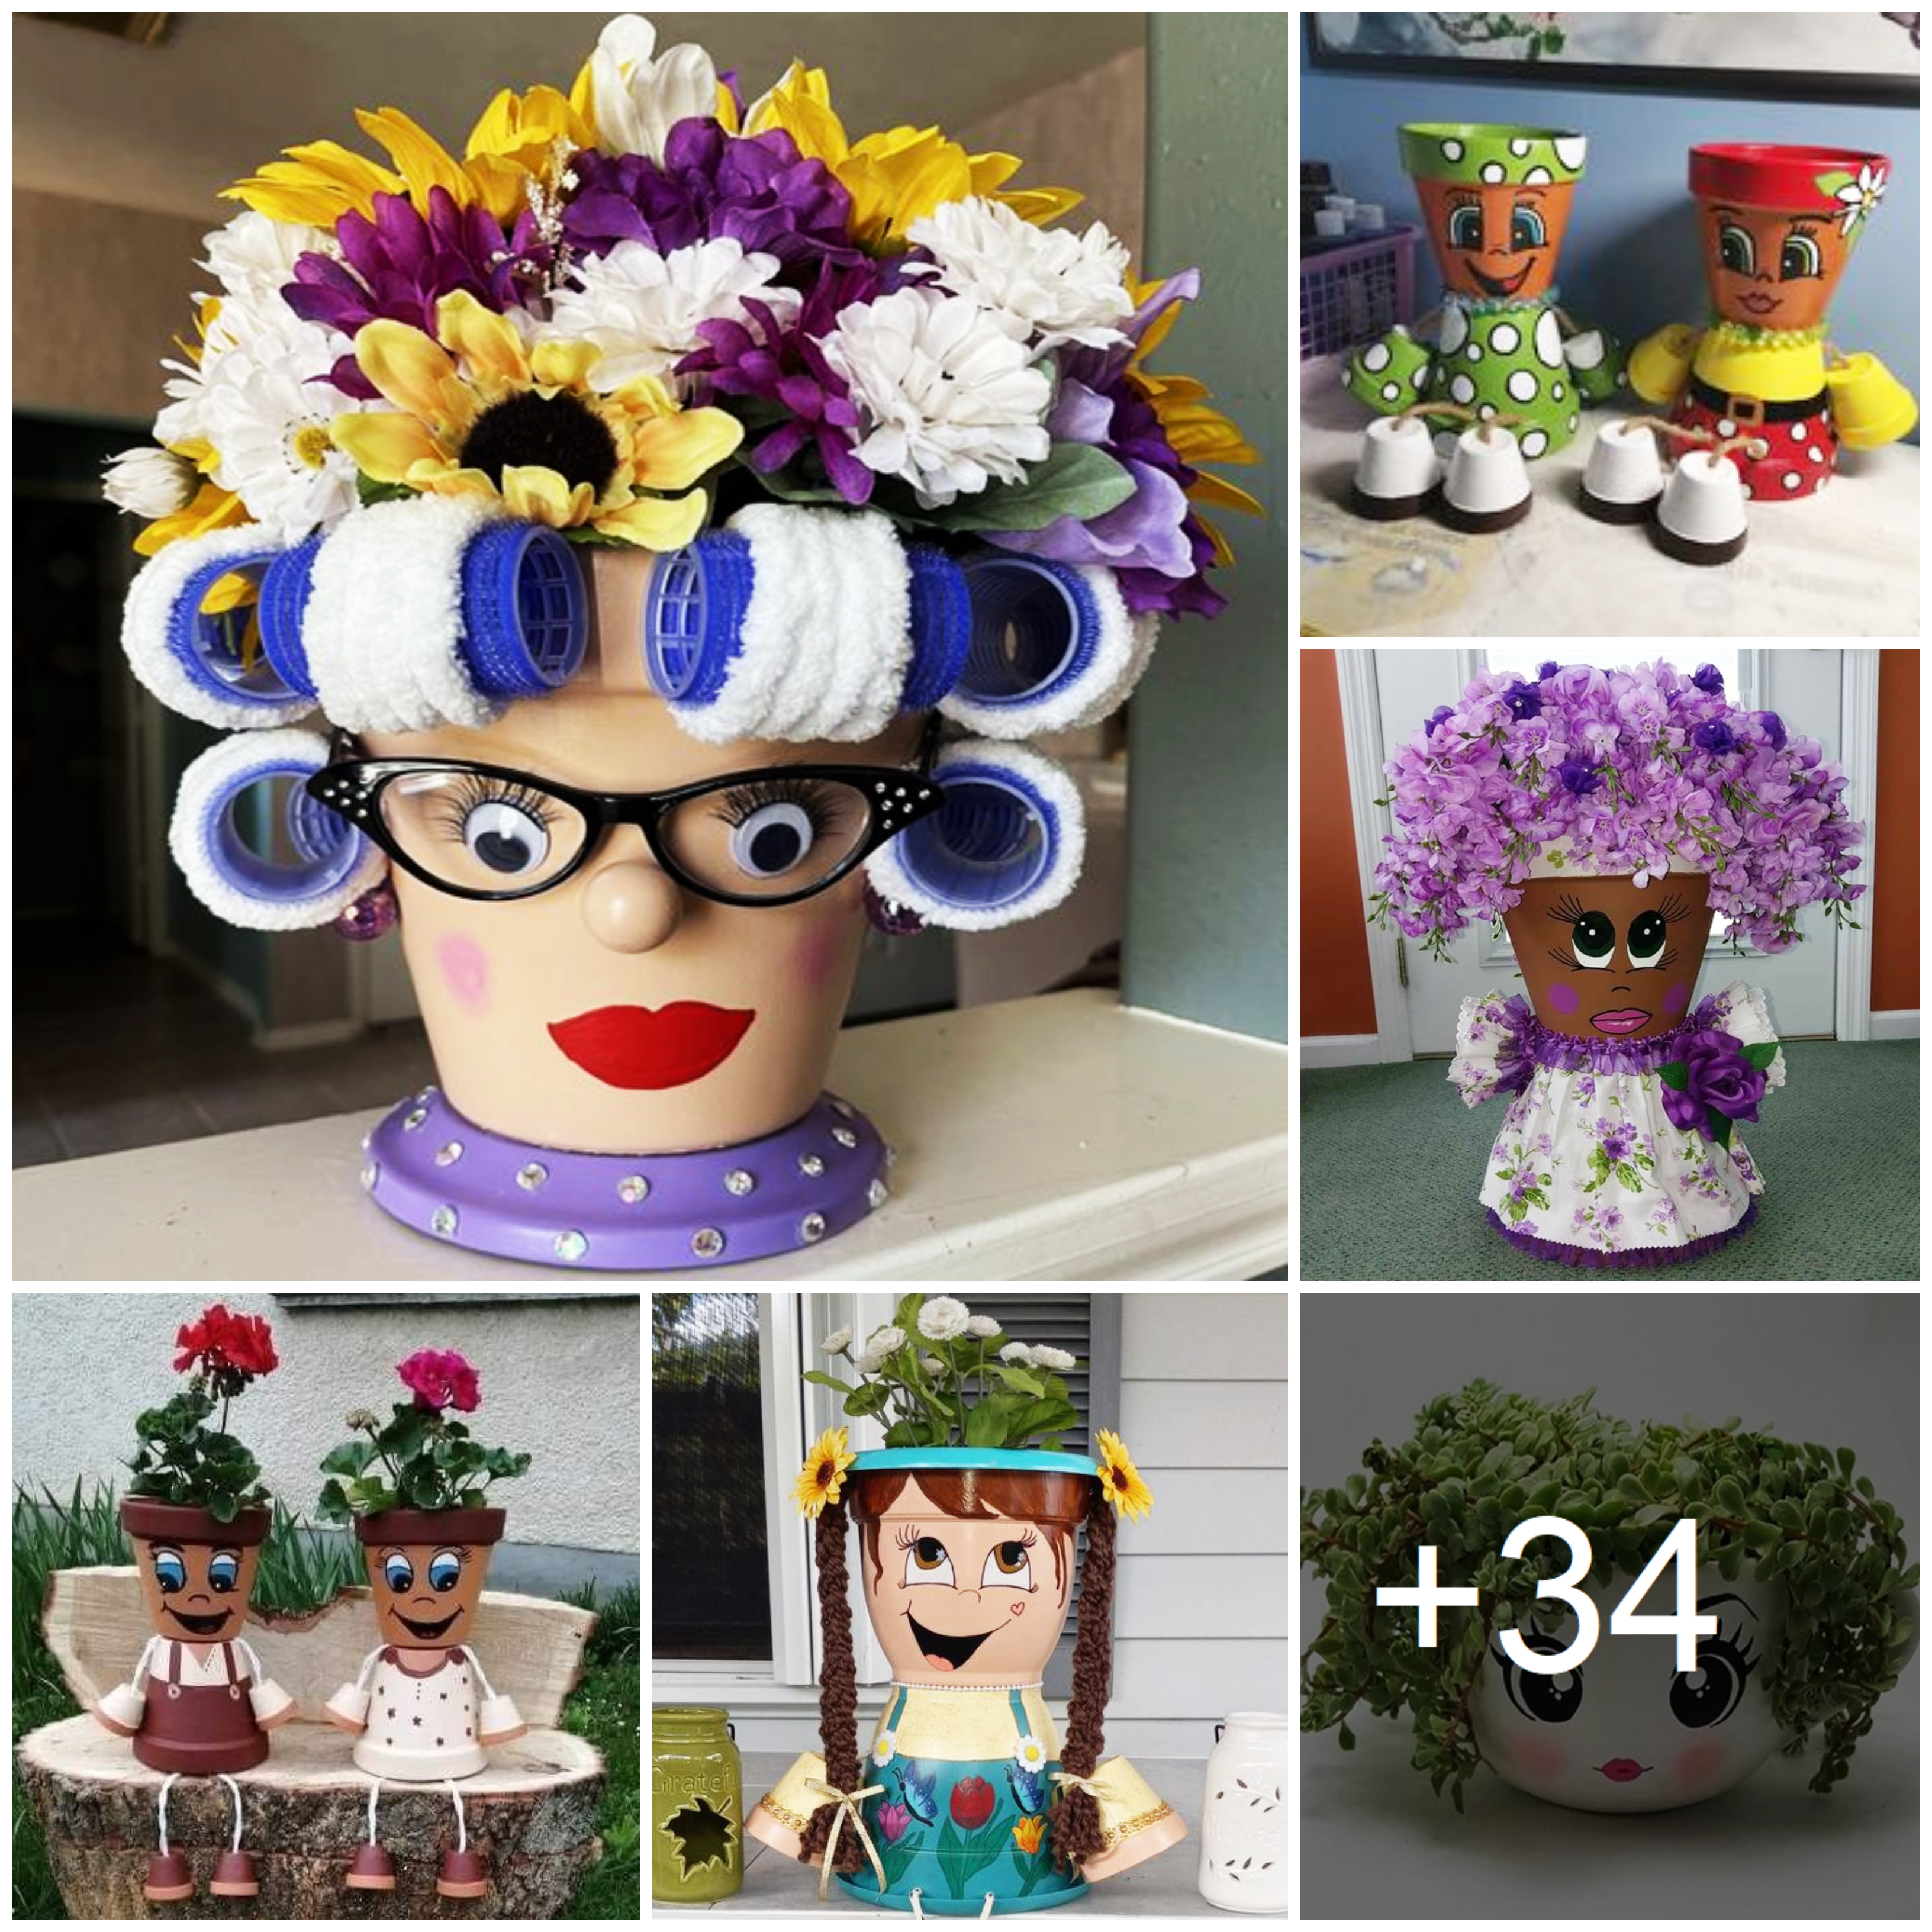 +34 captivating flower pot design ideas for your home